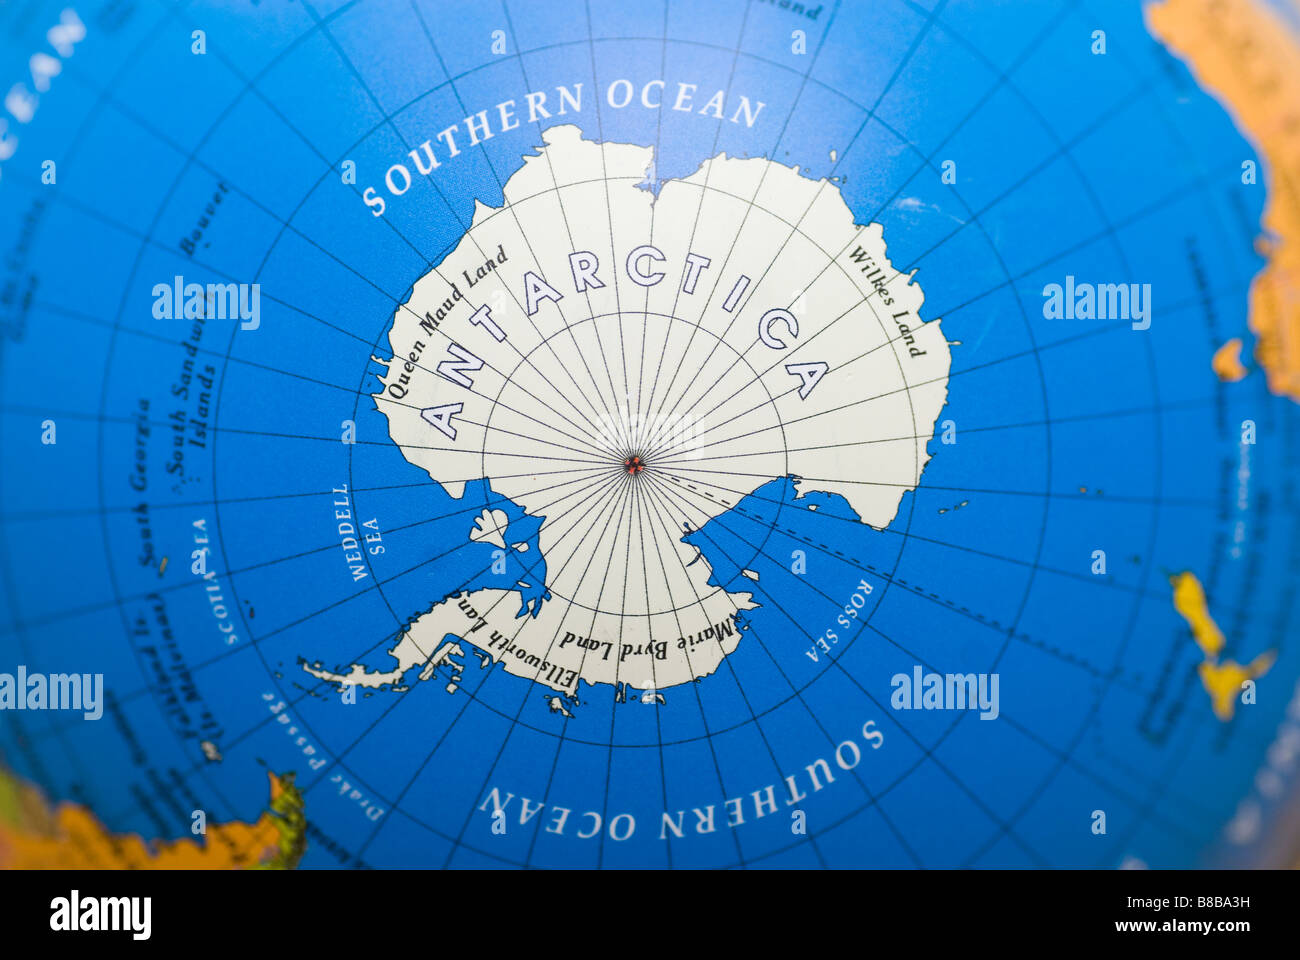 Chiusura del continente antartico su un globo mondo Foto Stock